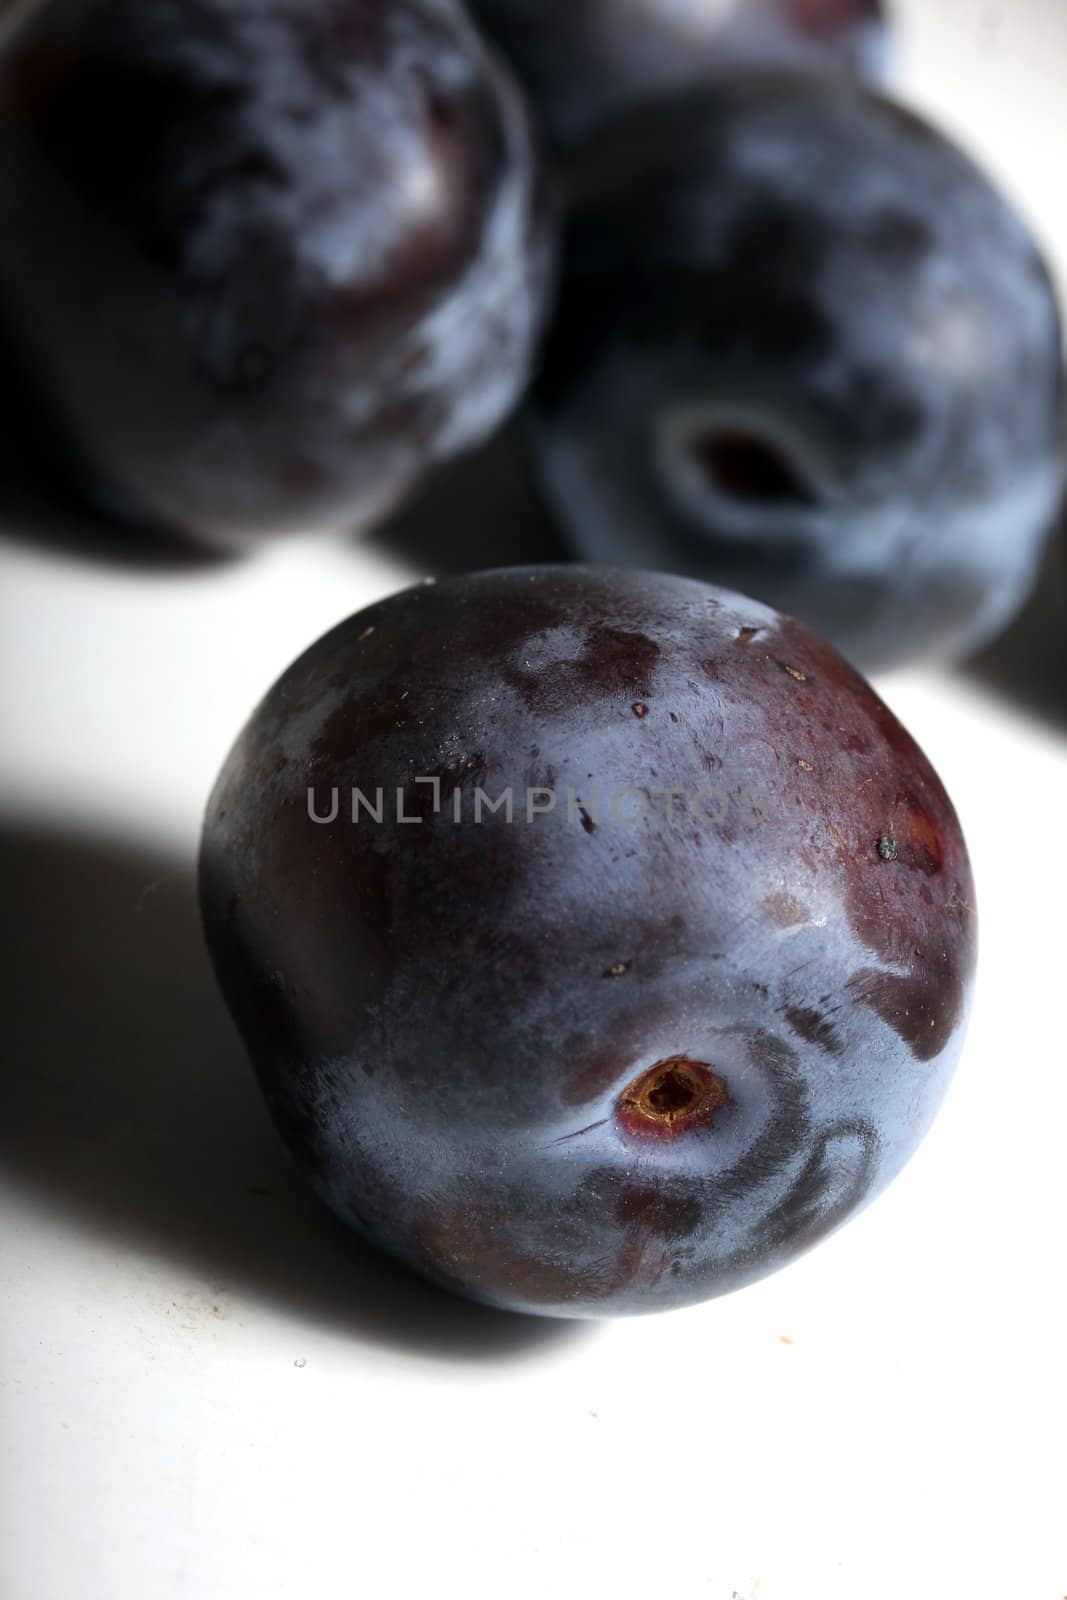 fresh purple plums by Teka77